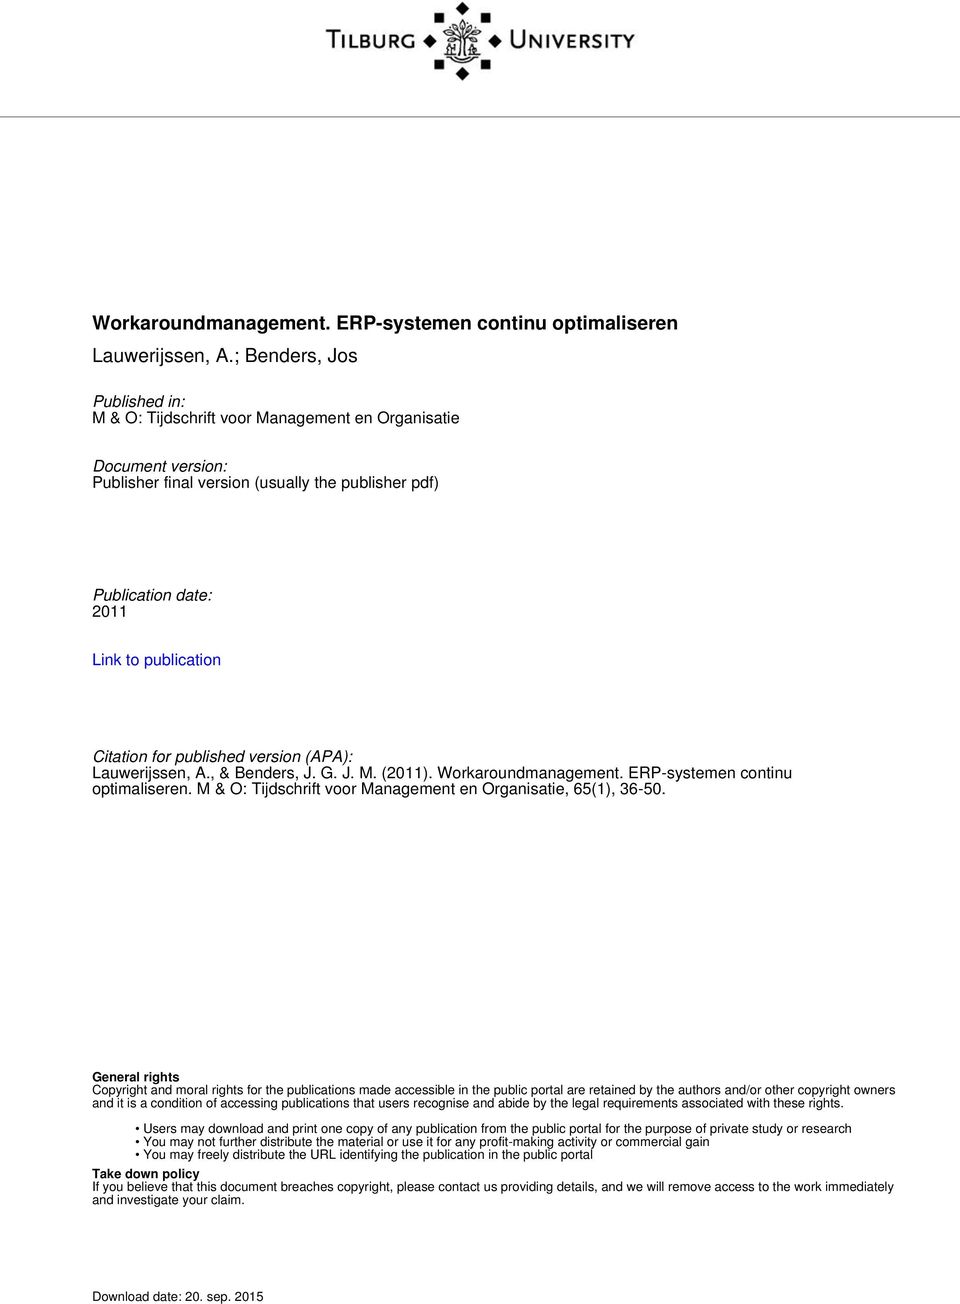 Citation for published version (APA): Lauwerijssen, A., & Benders, J. G. J. M. (2011). Workaroundmanagement. ERP-systemen continu optimaliseren.